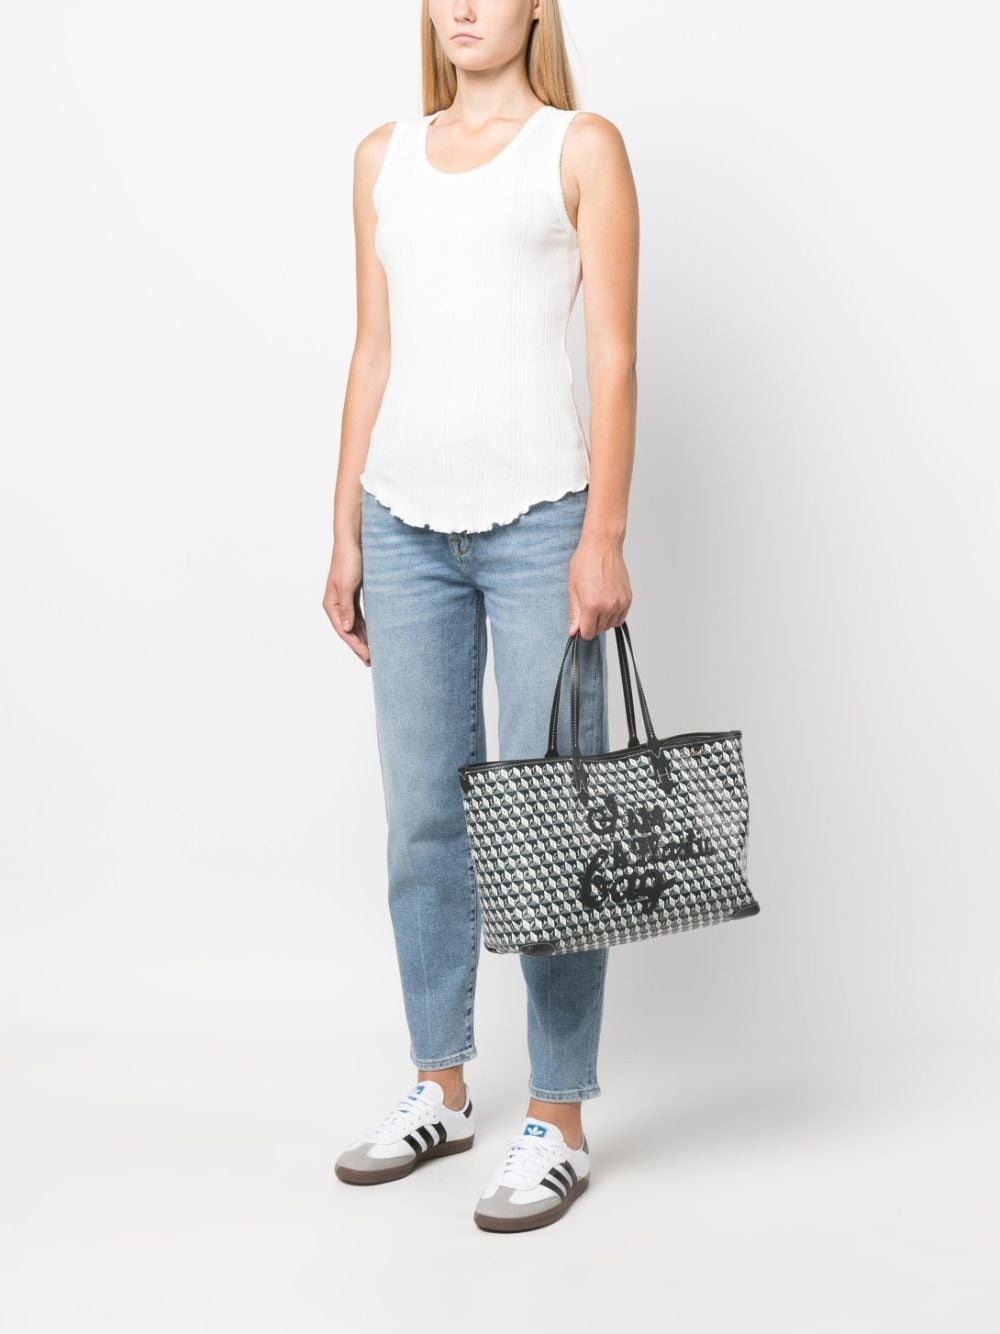 Anya Hindmarch - Women's I Am A Plastic Bag Wink Xs Tote Bag - Gray - Cotton